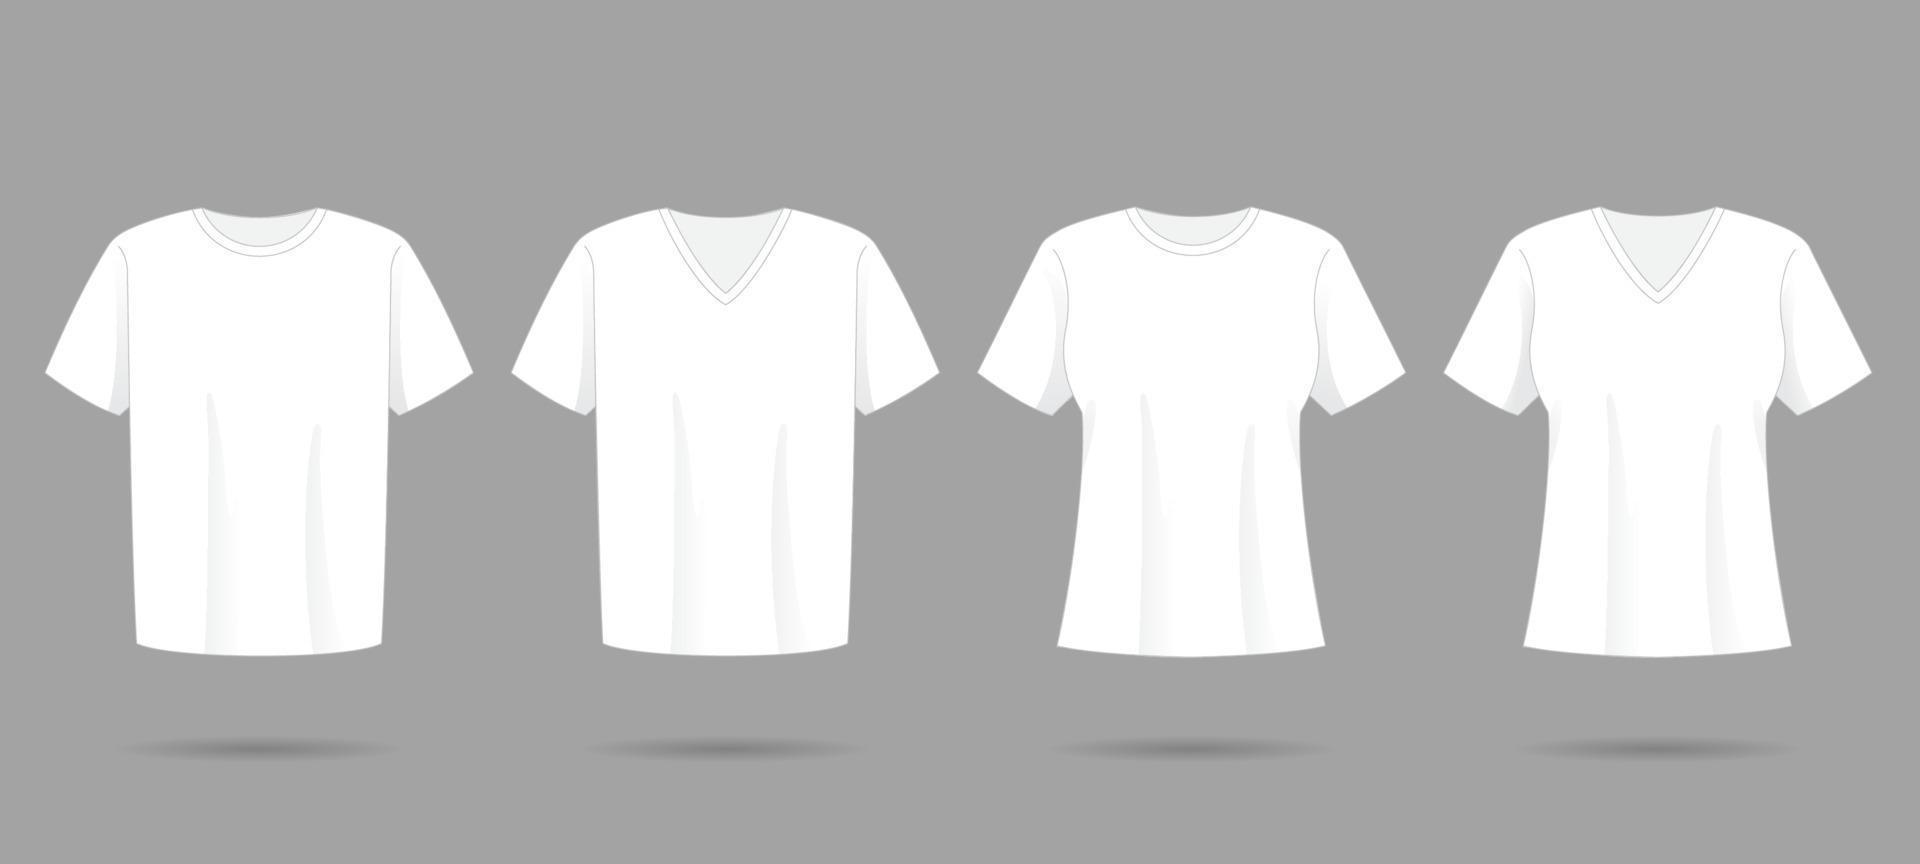 maqueta de camiseta blanca vector